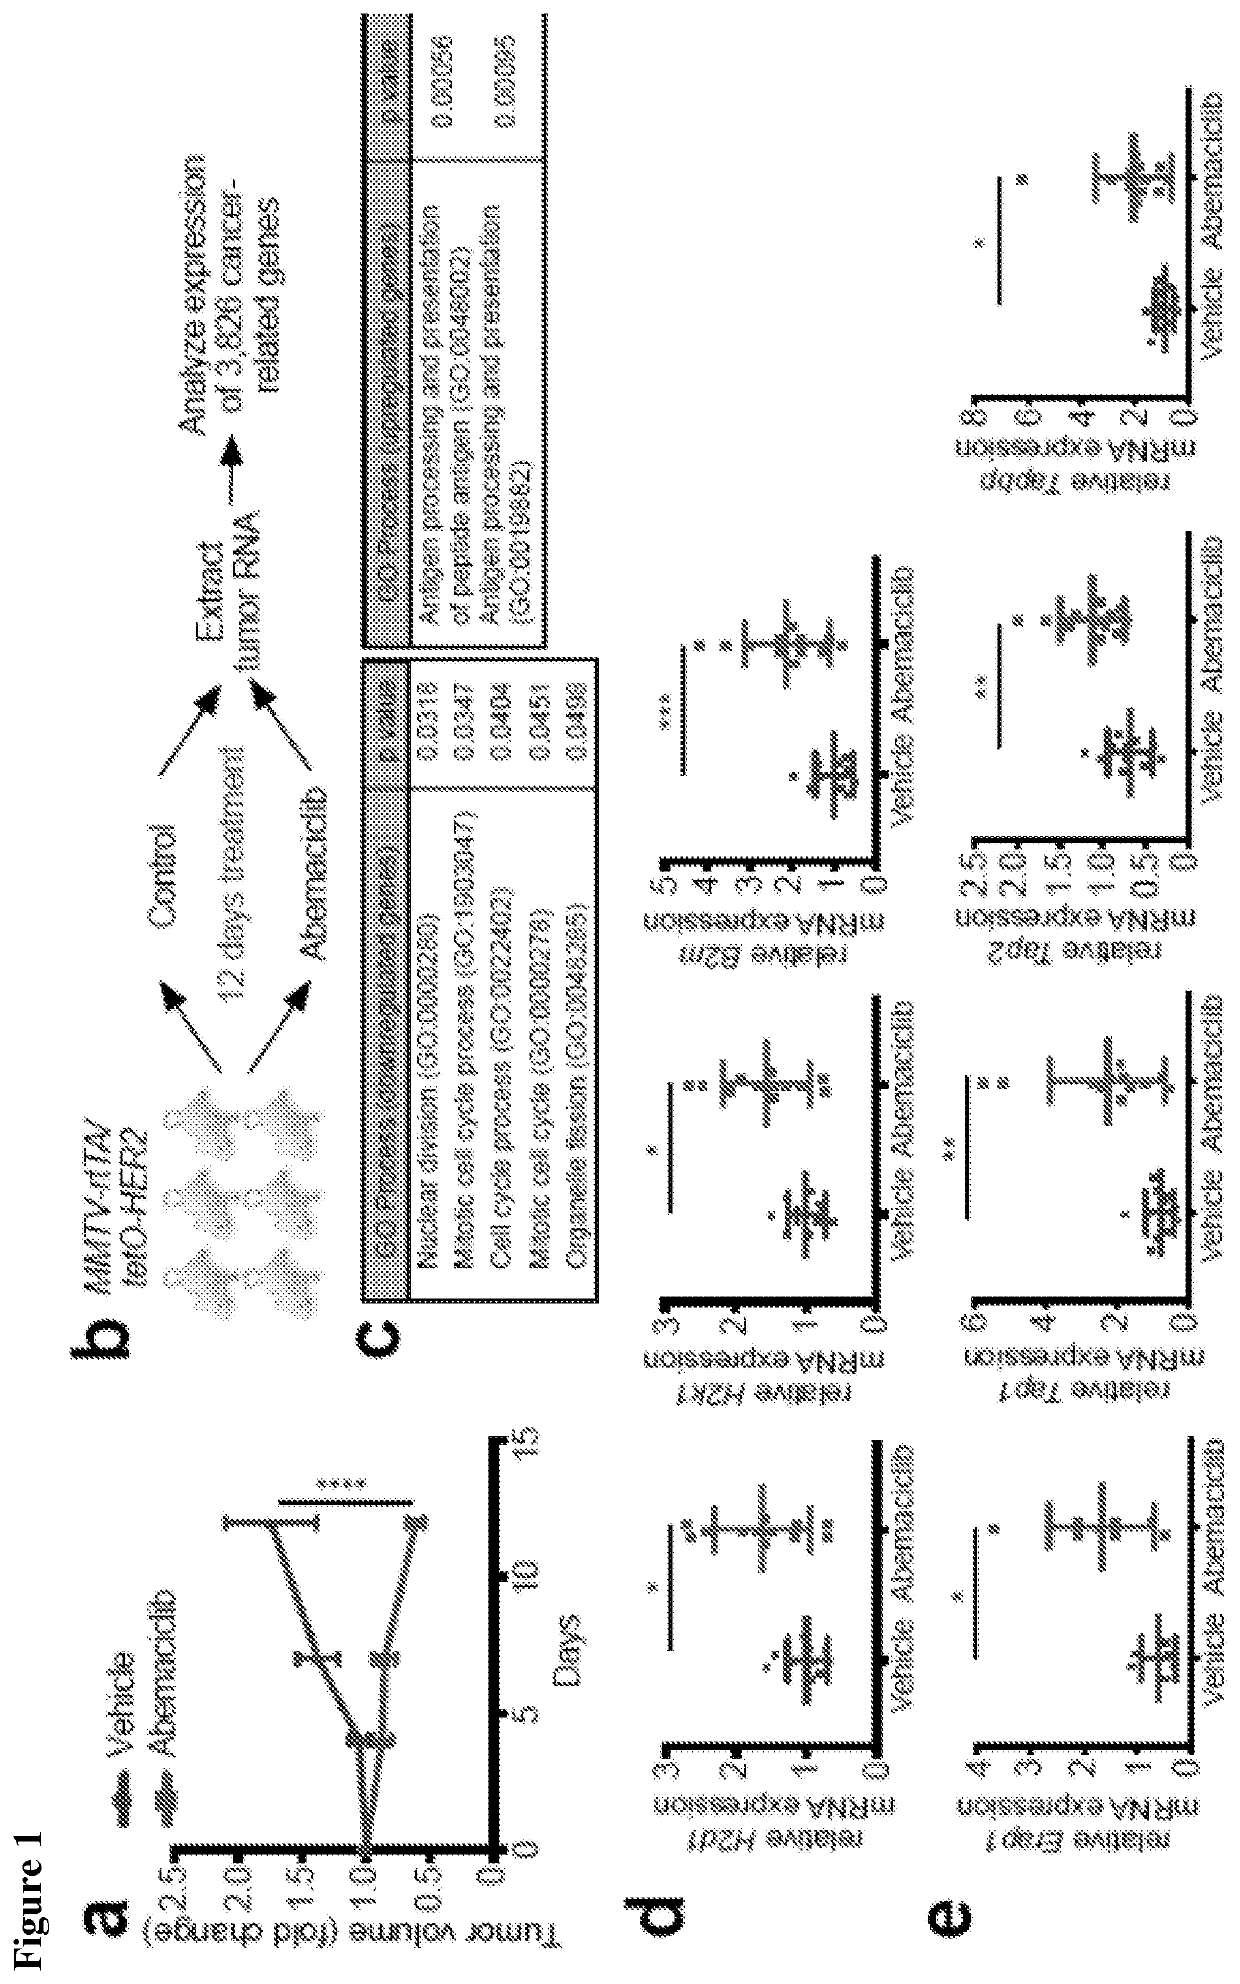 Methods for modulating regulatory t cells and immune responses using cdk4/6 inhibitors